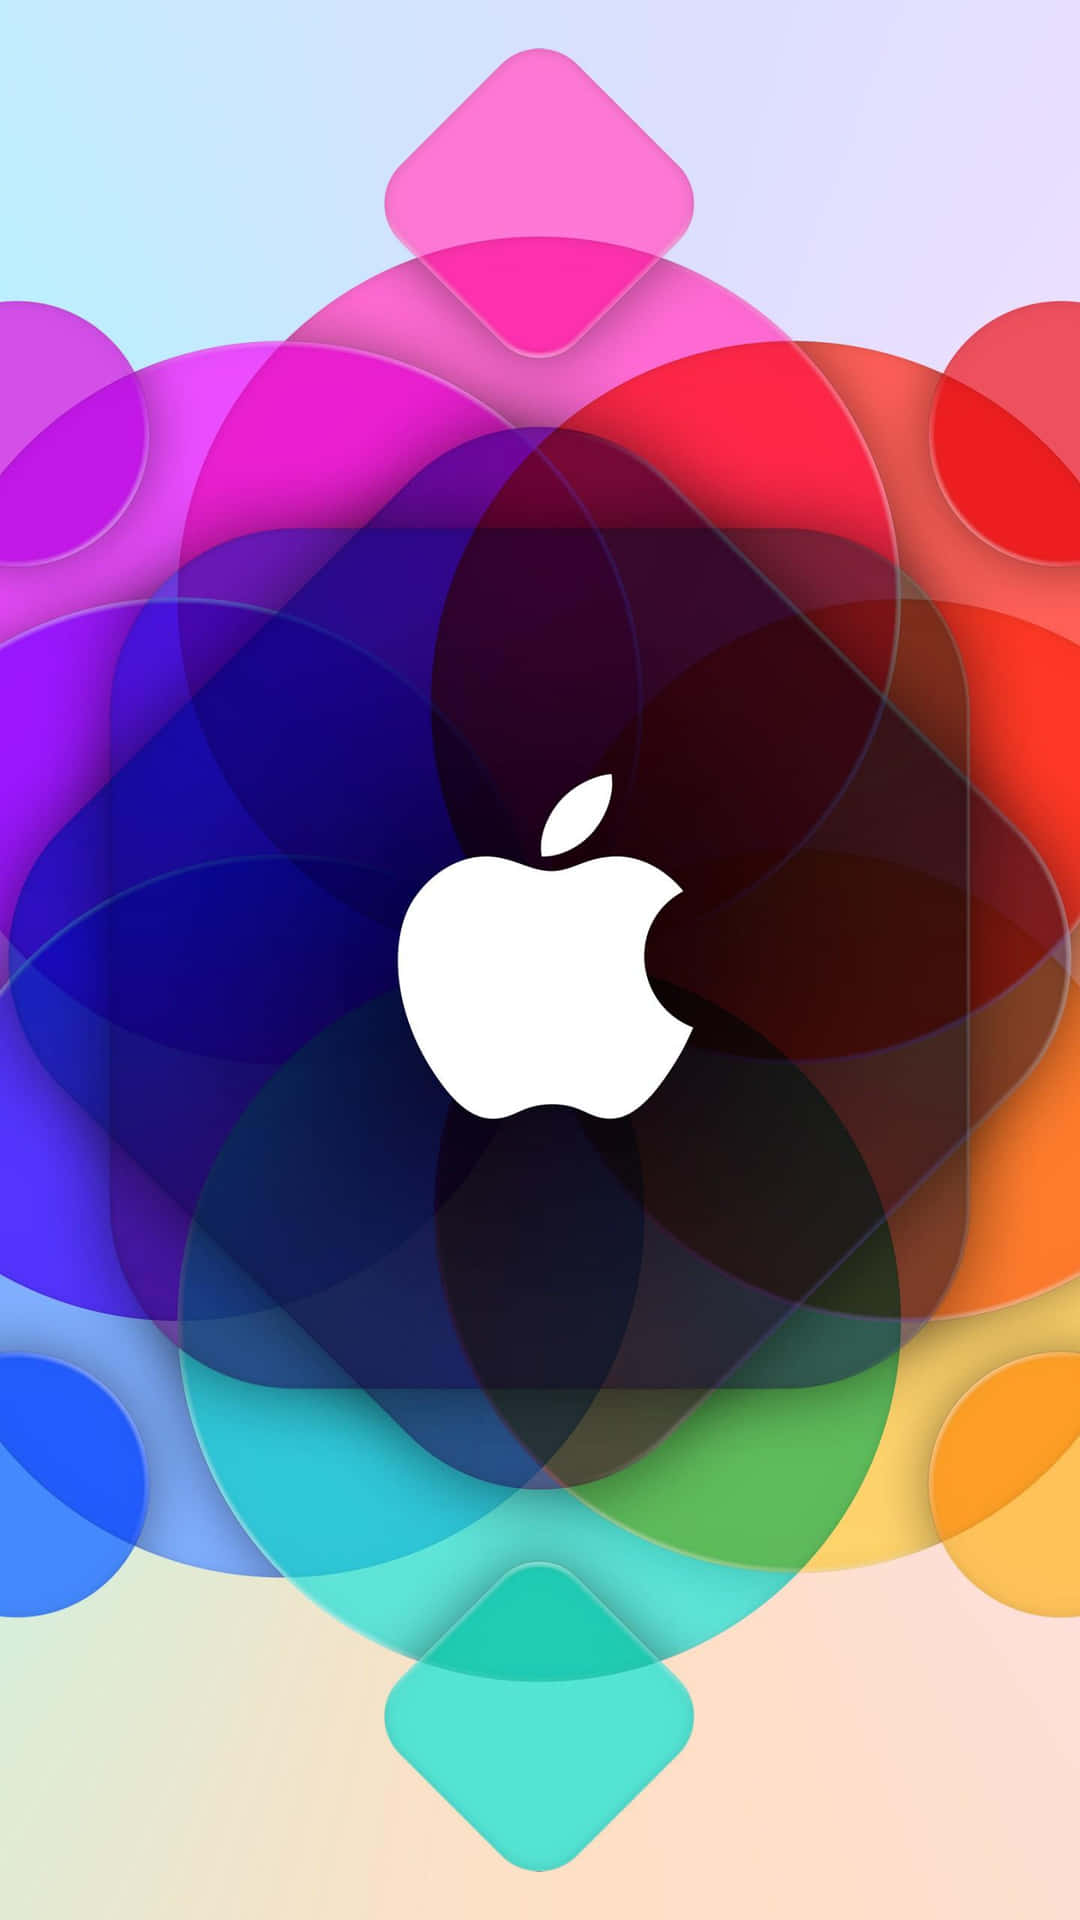 Buntesgeometrisches Muster, Atemberaubendes Hd-apple-iphone Wallpaper